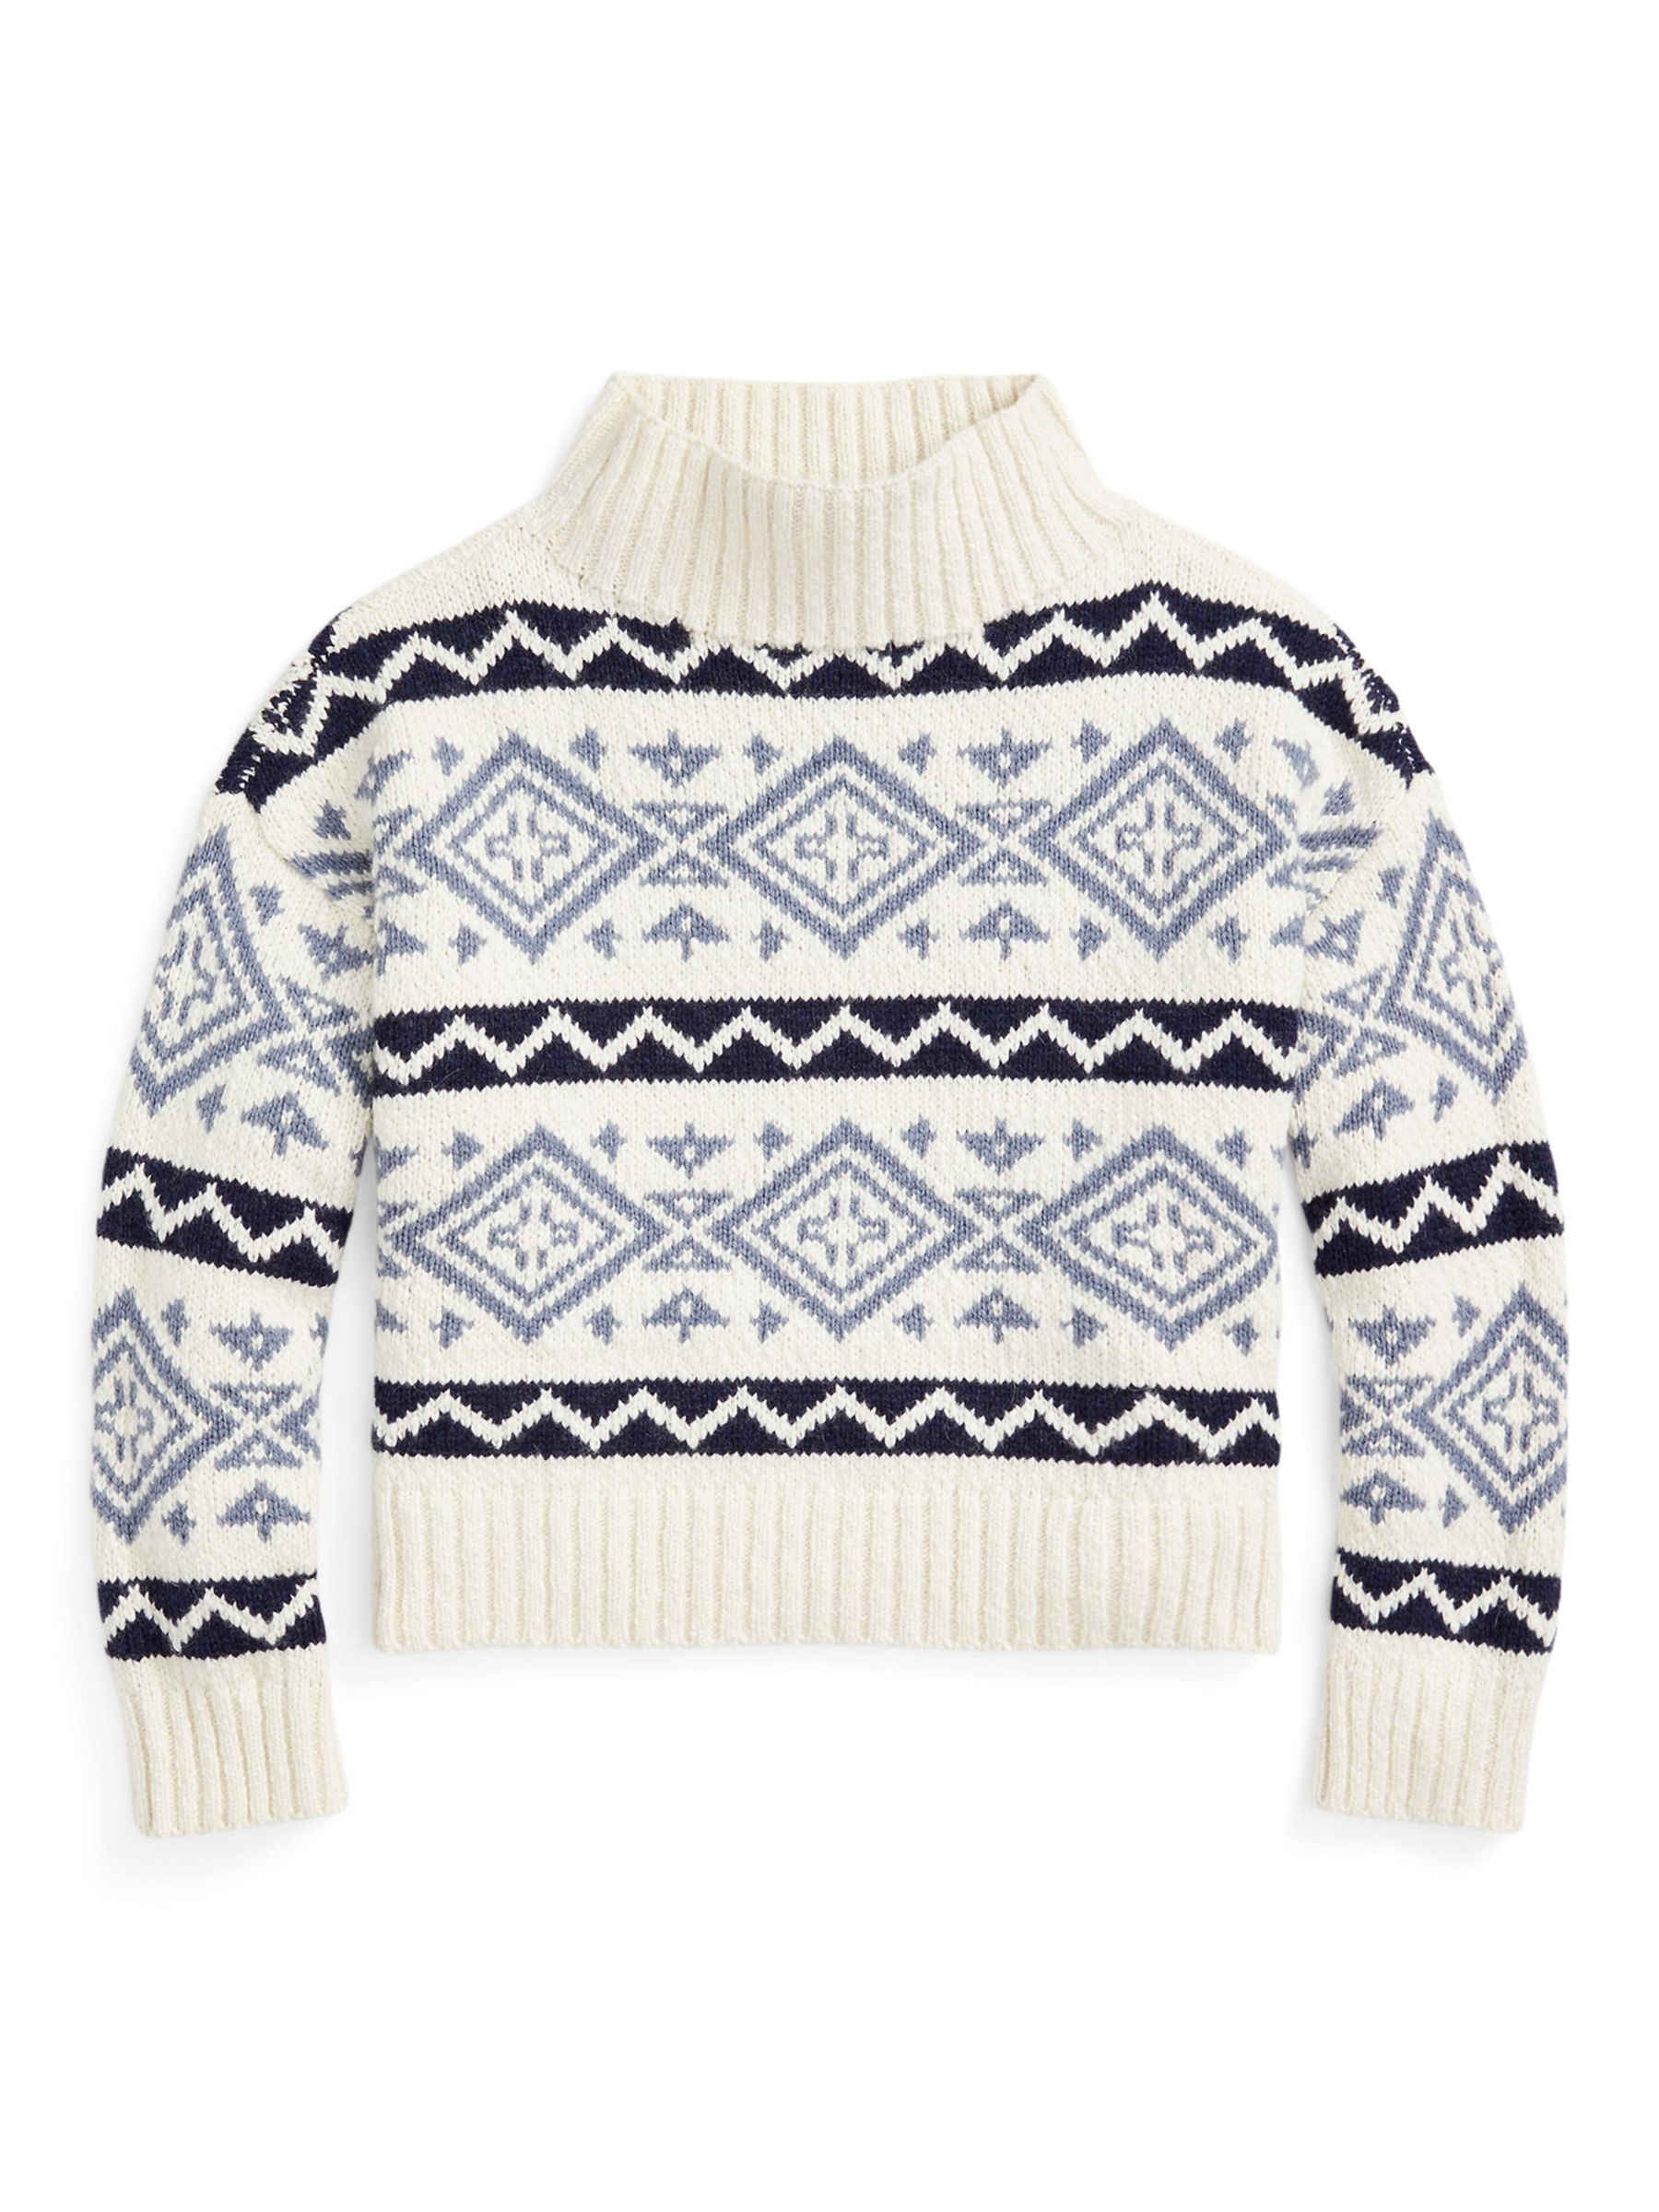 Polo Ralph Lauren, Polo Ralph Lauren Fair Isle Patterned Fleece Sweatshirt, Multi Nordic